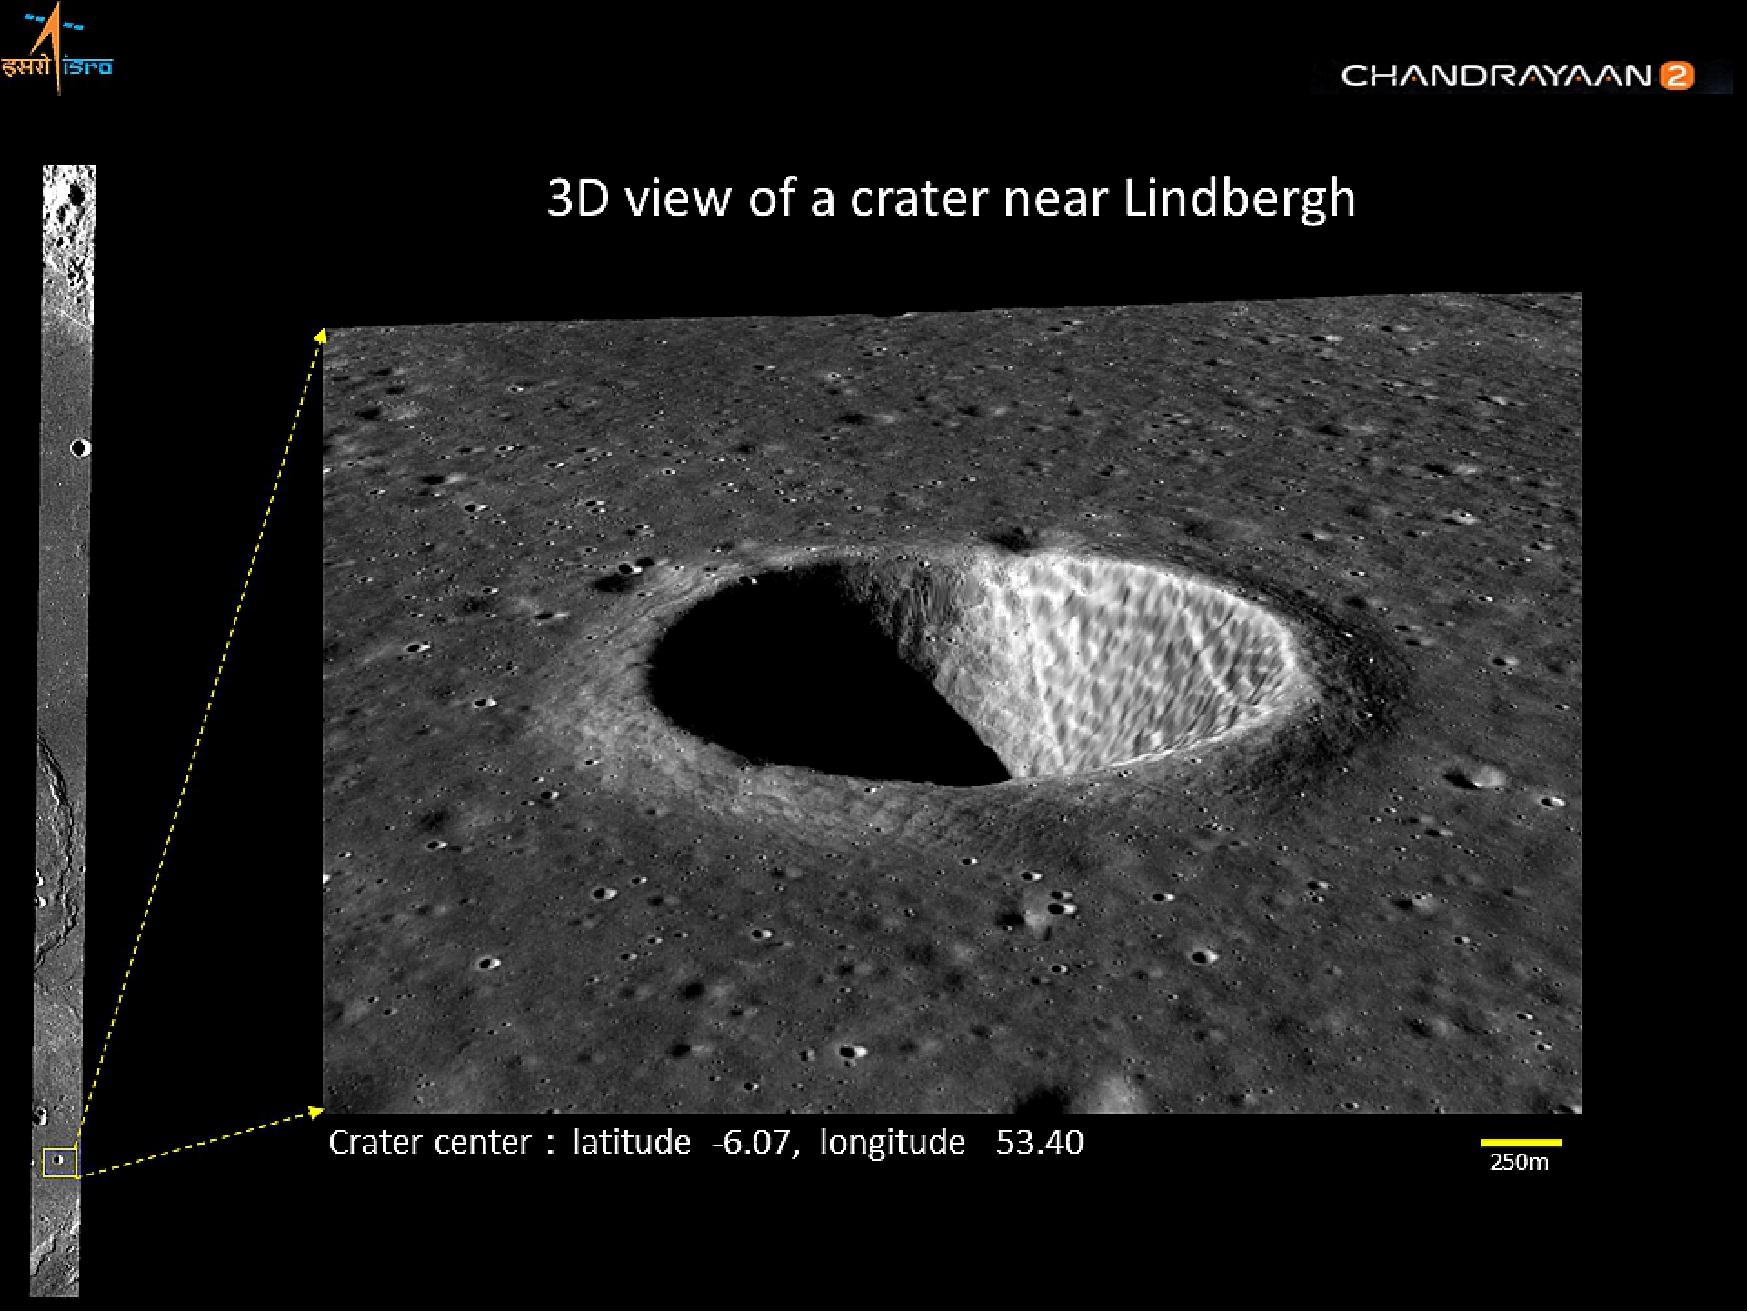 Figure 9: TMC-2 3D view of a crater near Lindbergh (image credit: ISRO)